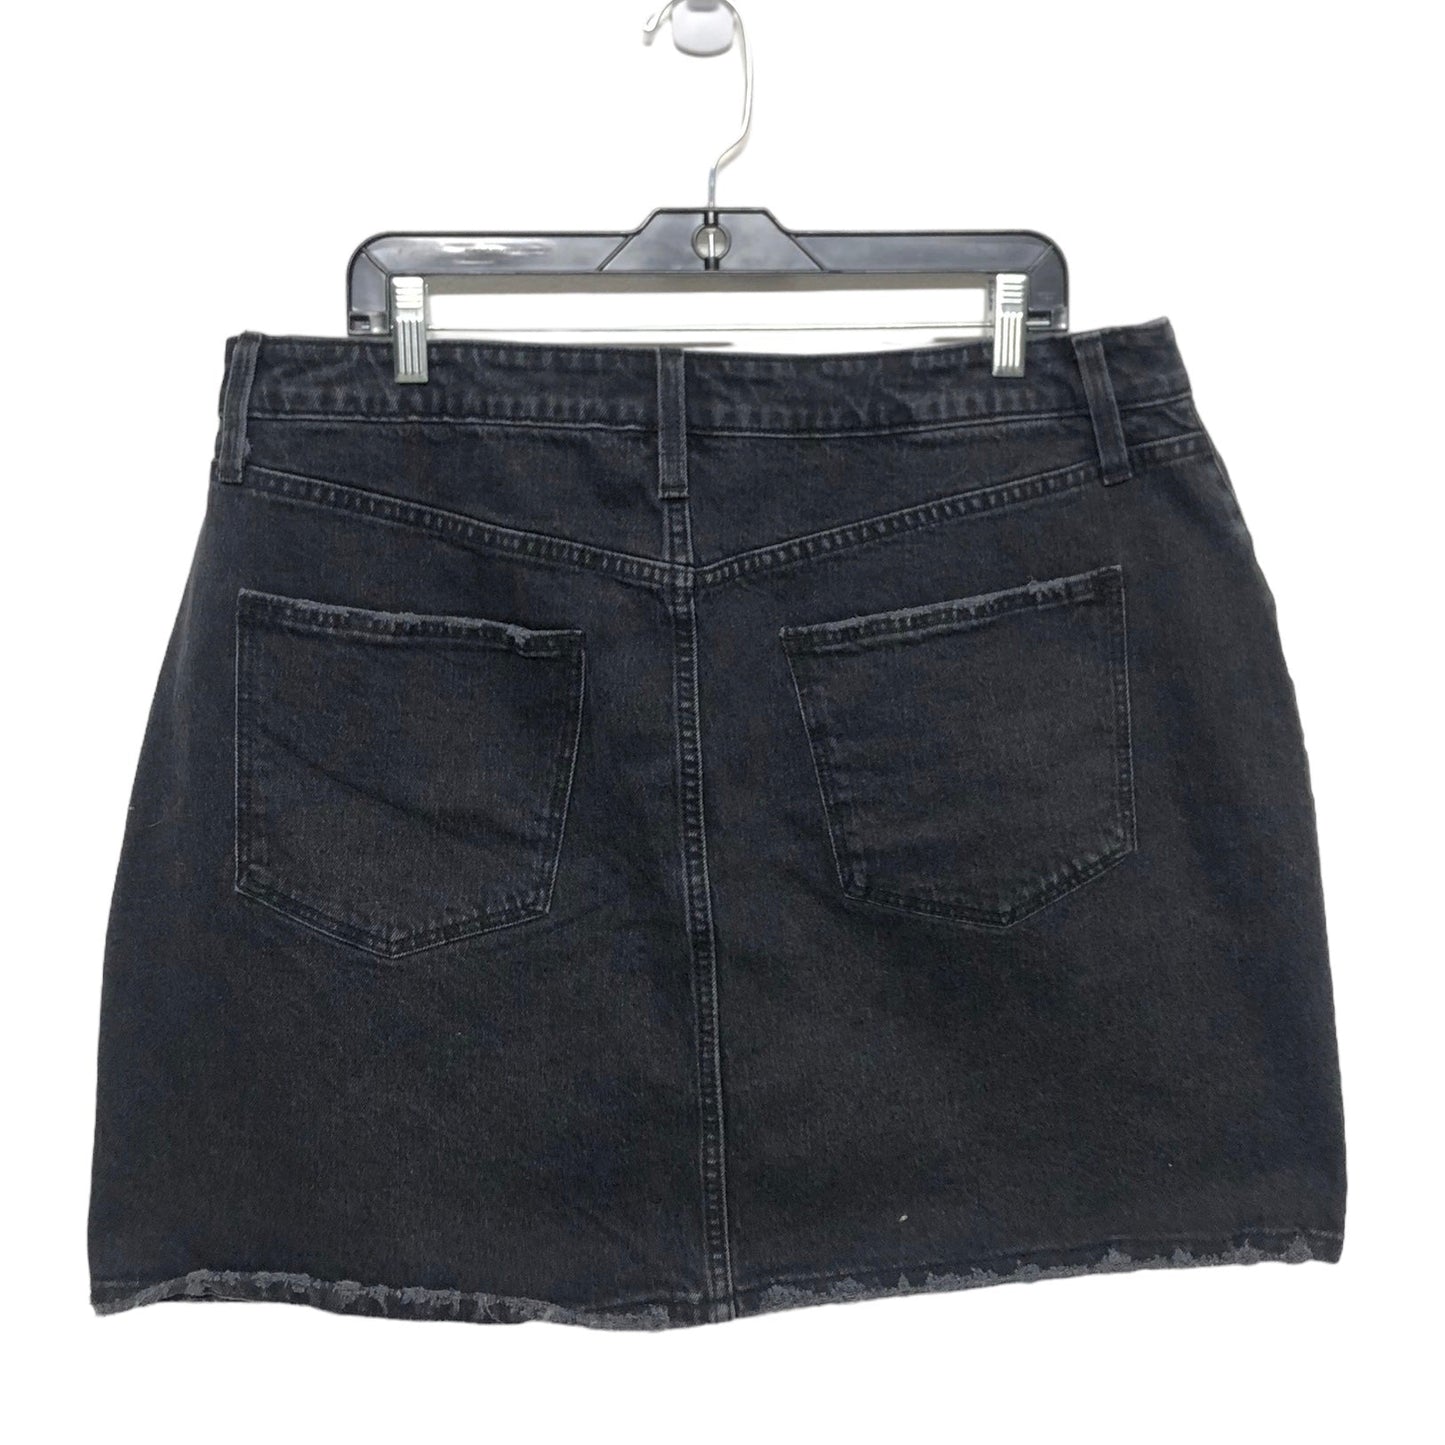 Skirt Mini & Short By Universal Thread  Size: 14